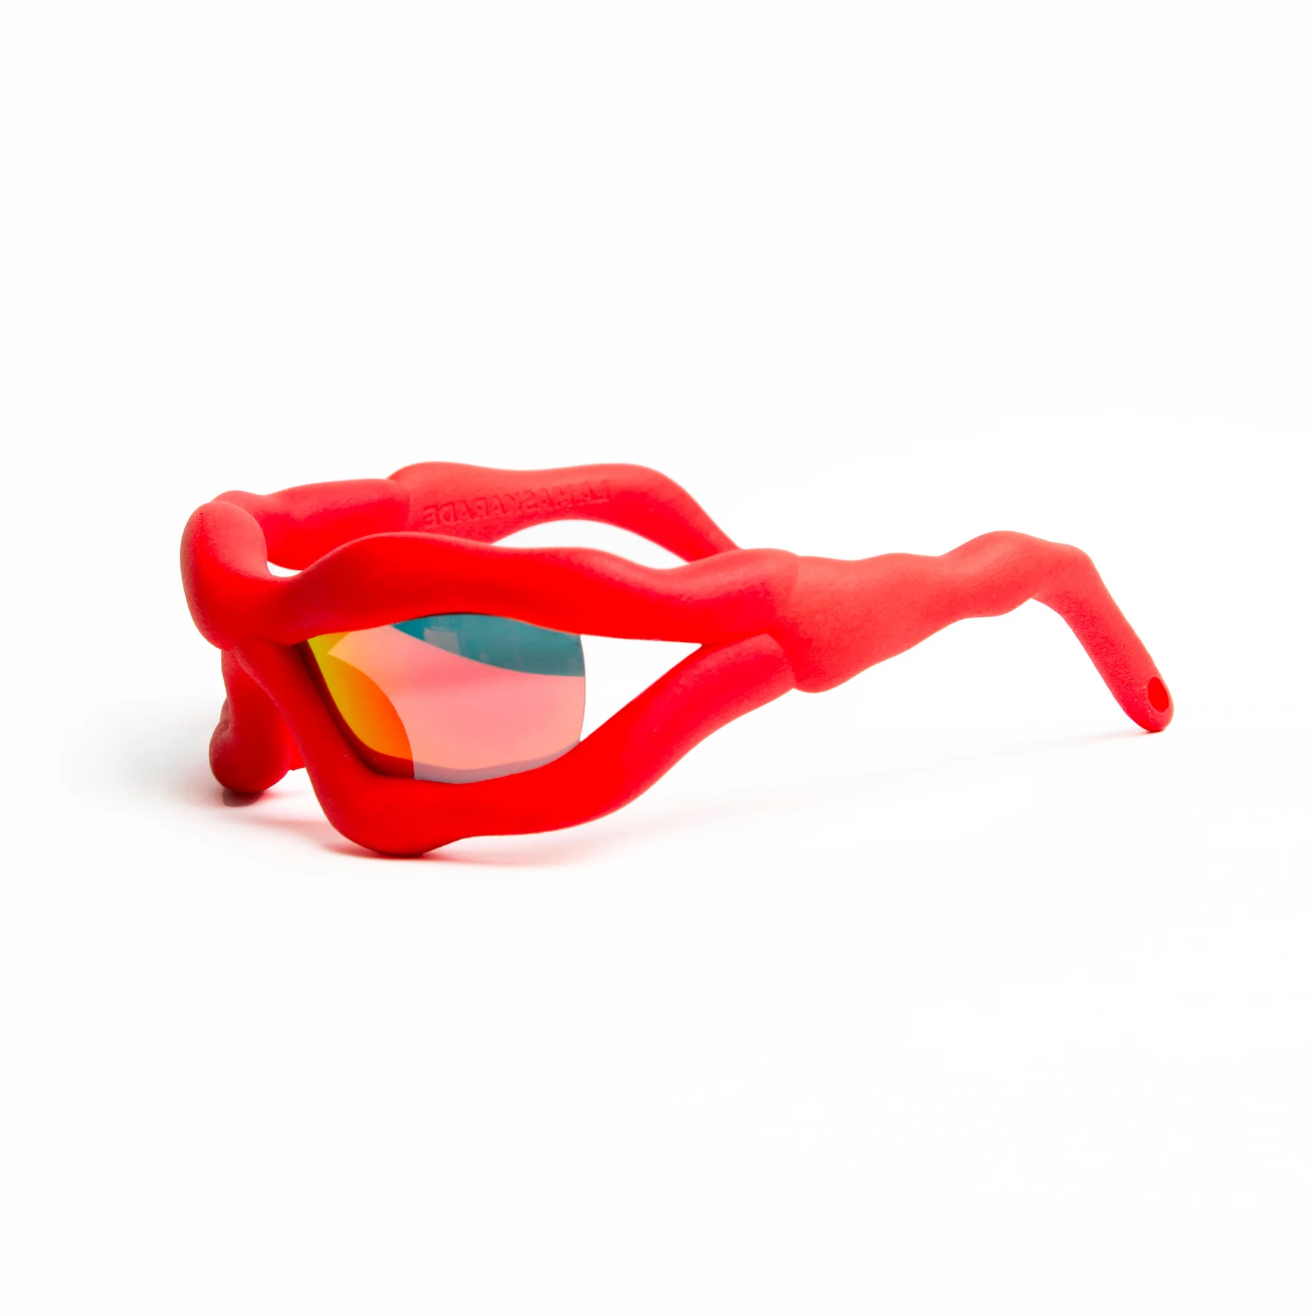 Red Sunglasses at Night